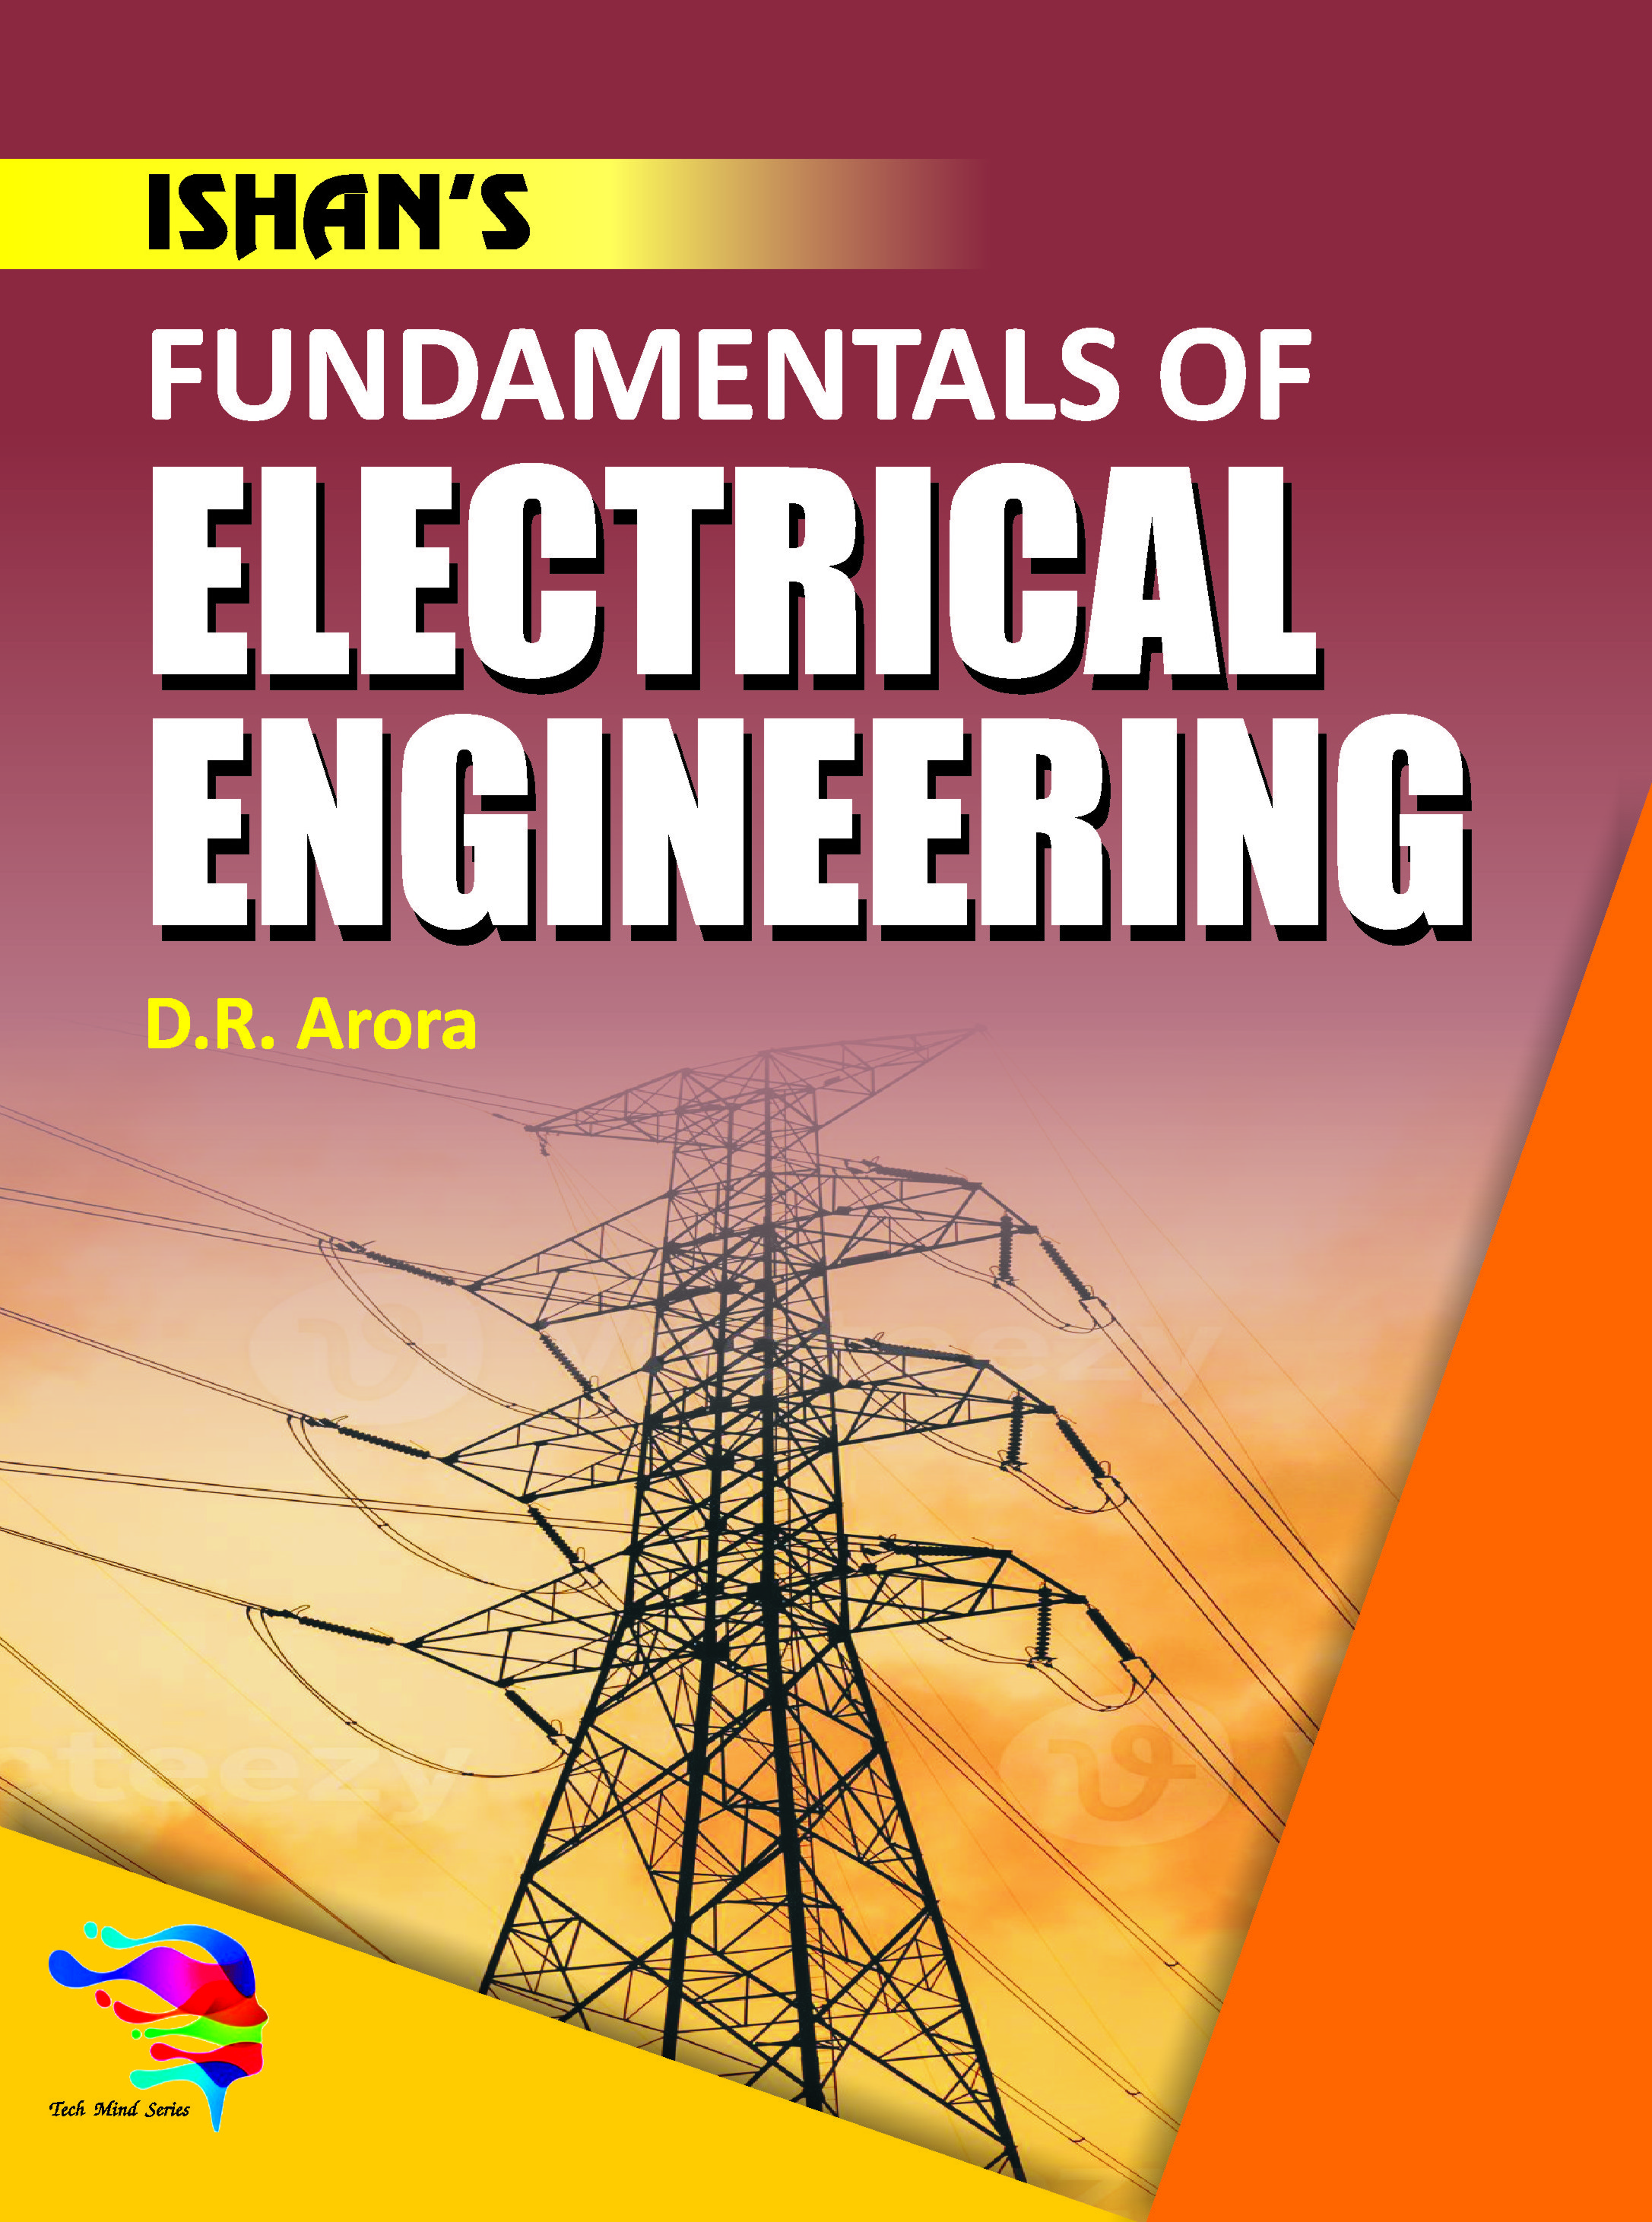 Fundamental of Electrical Engineering